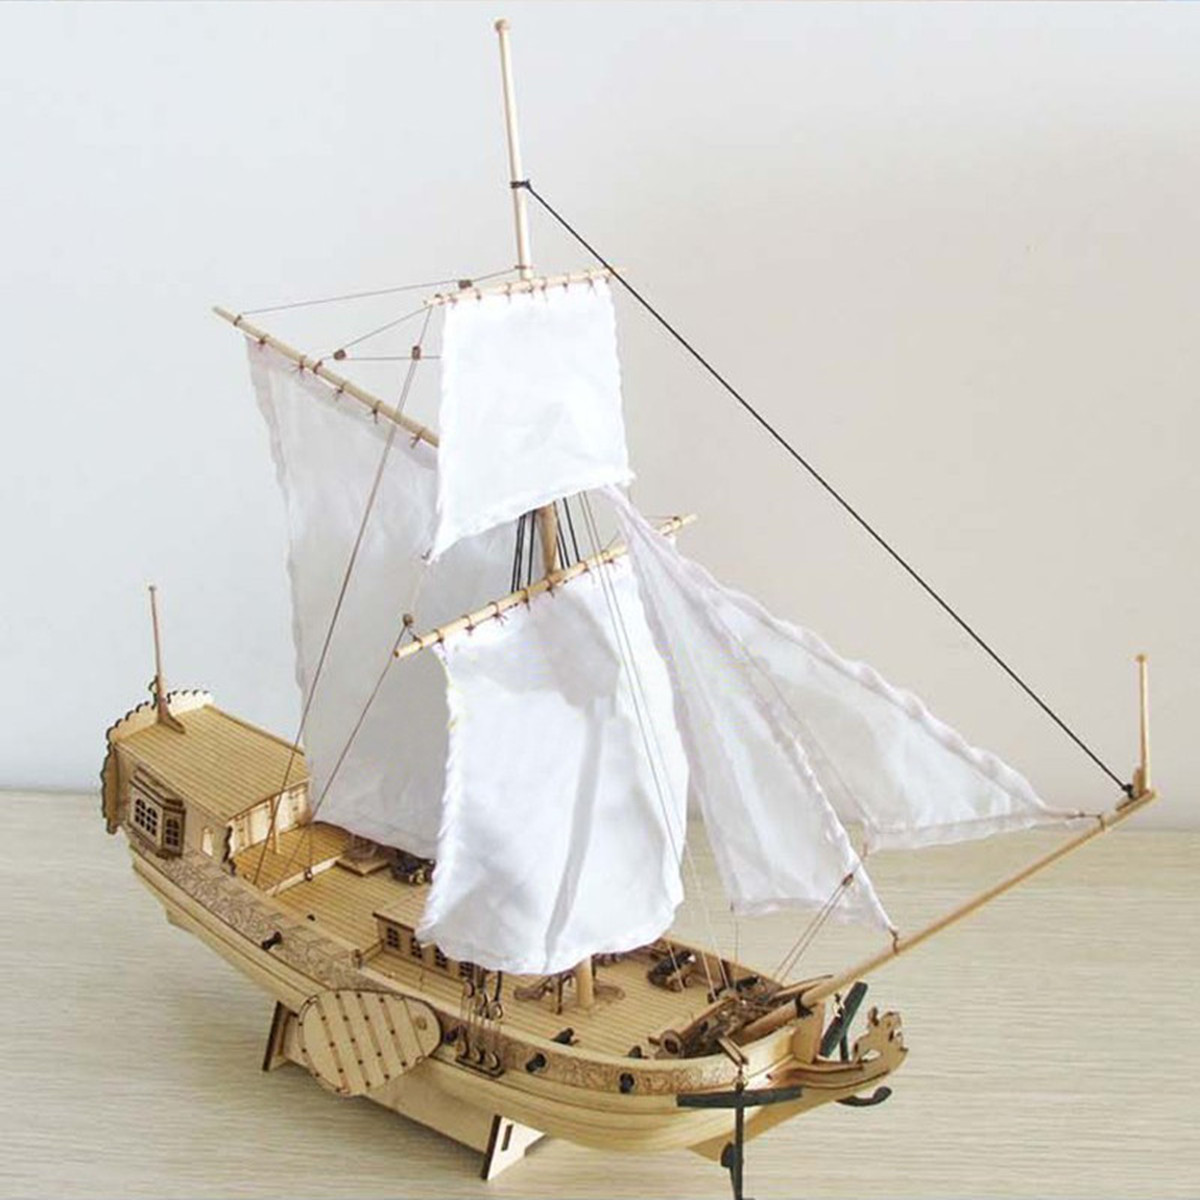 310mm-Wooden-Ship-Model-DIY-Fishing-Boat-Laser-Cut-Assembly-Model-Kits-Toys-Gift-1343792